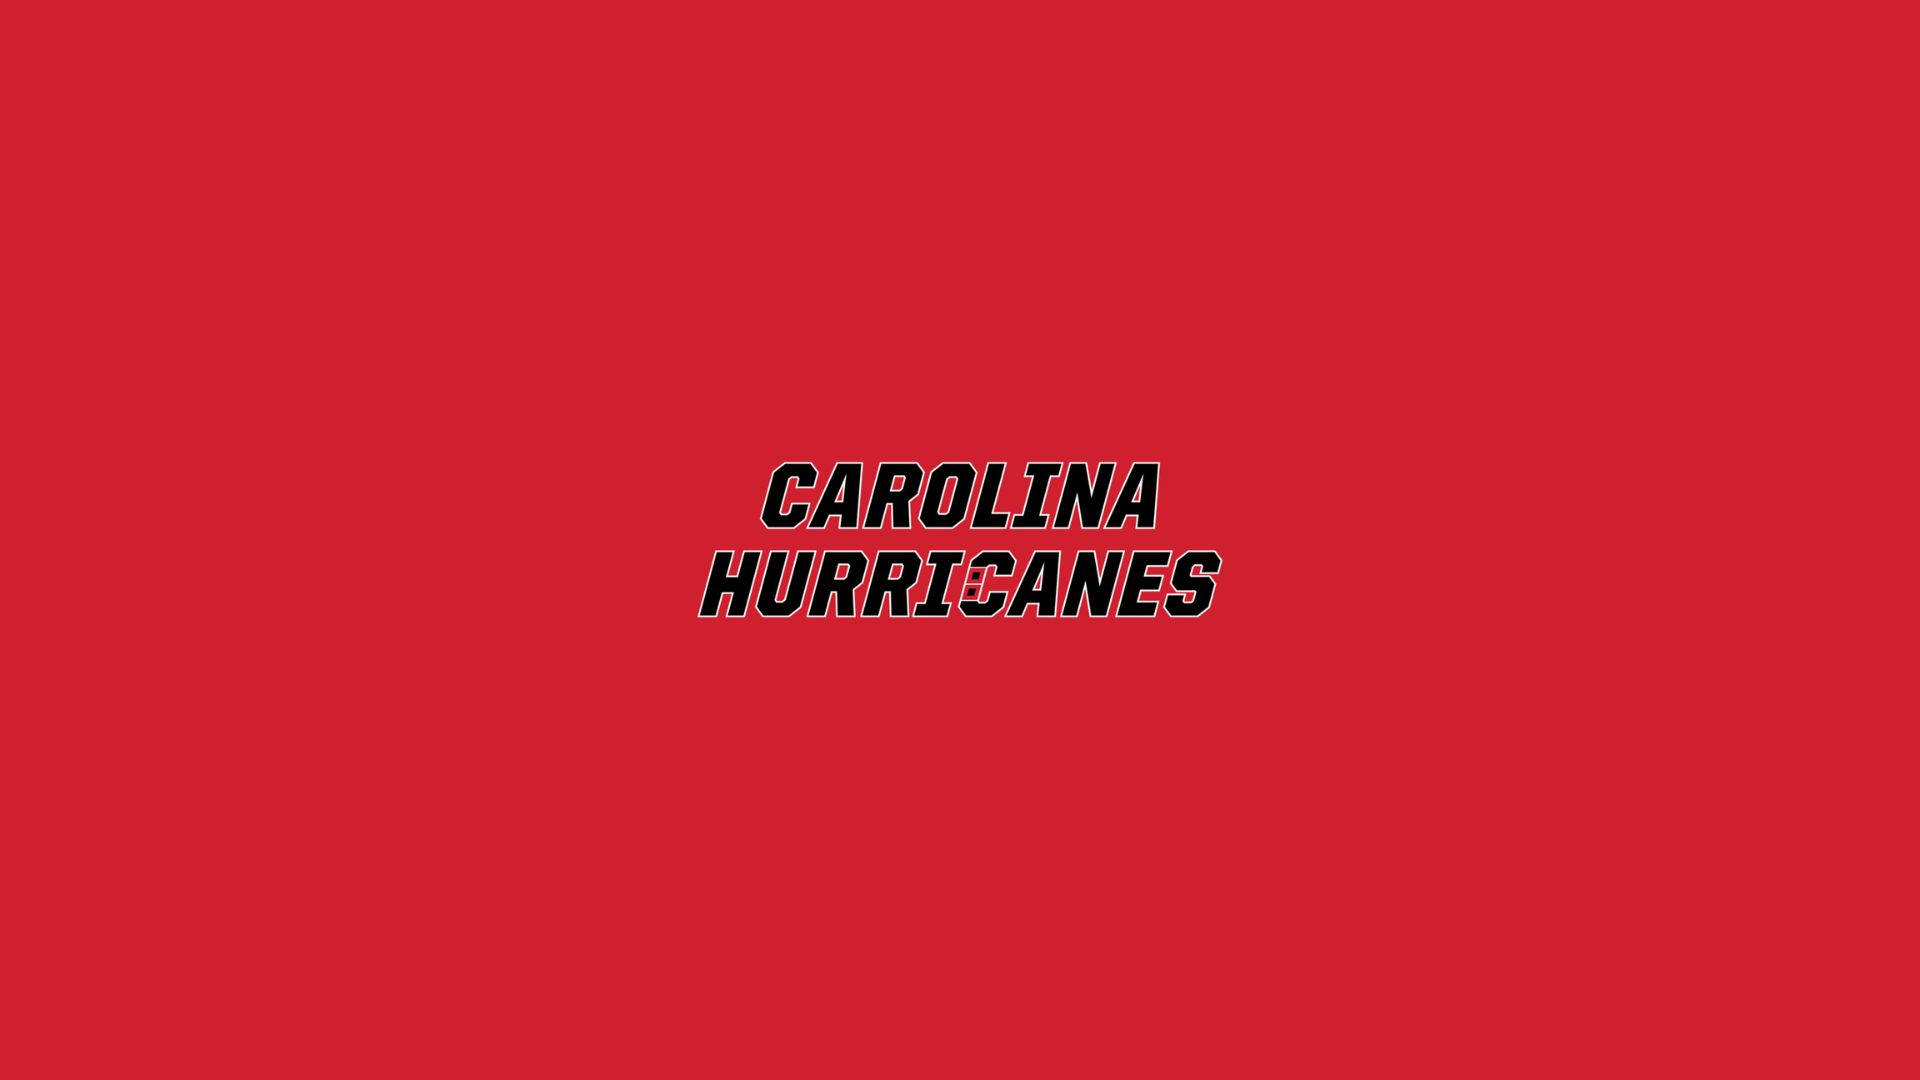 Carolina Hurricanes On Red Background Wallpaper